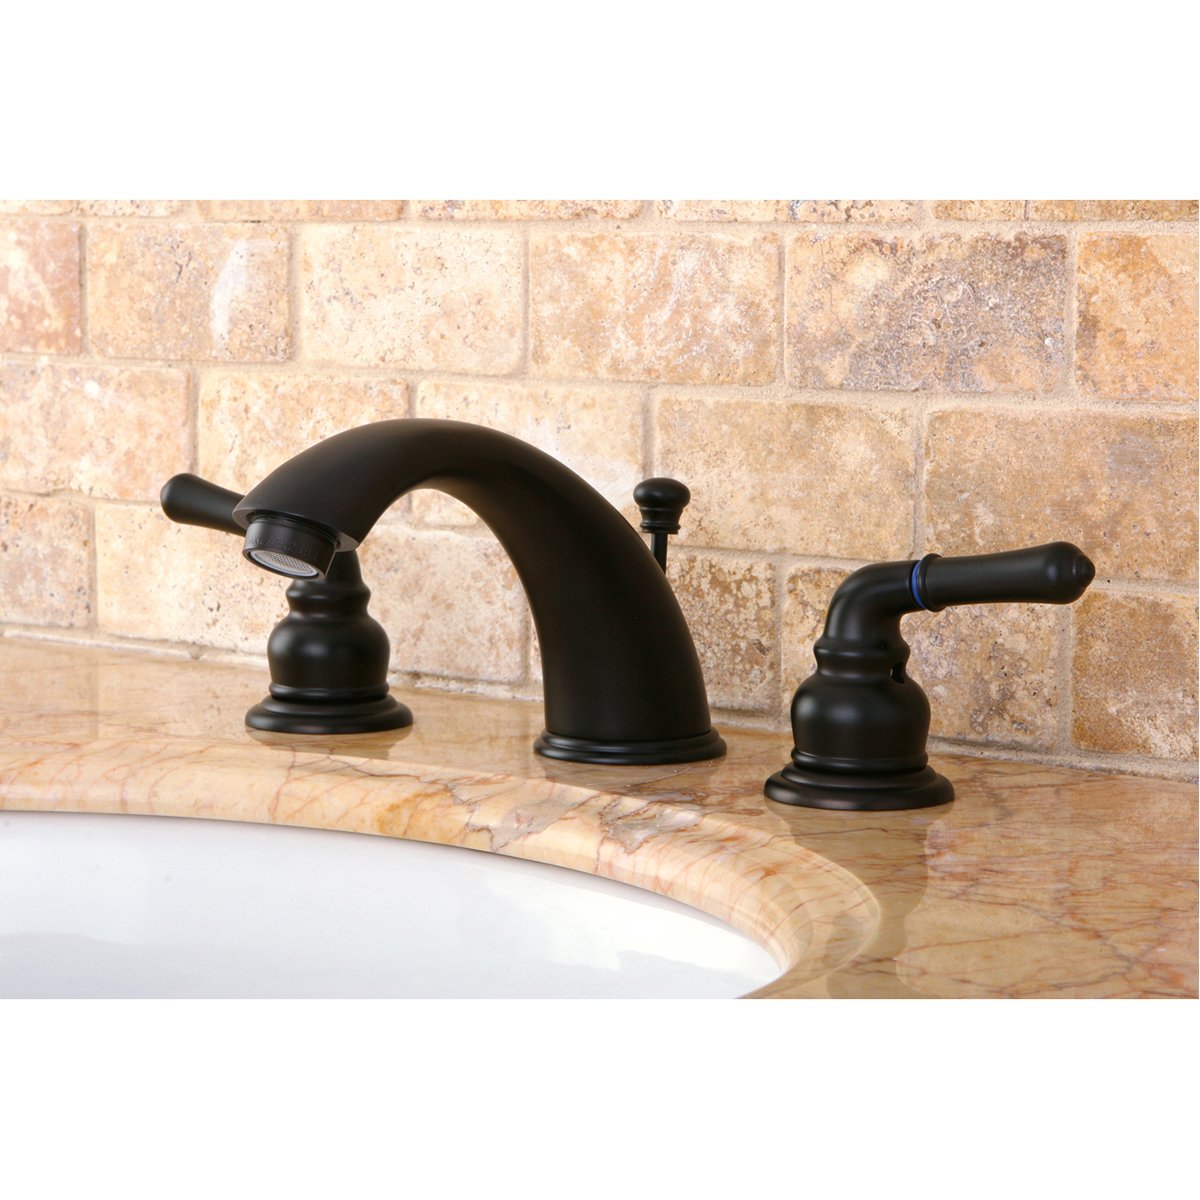 Kingston Brass Magellan 3-Hole Widespread Bathroom Faucet